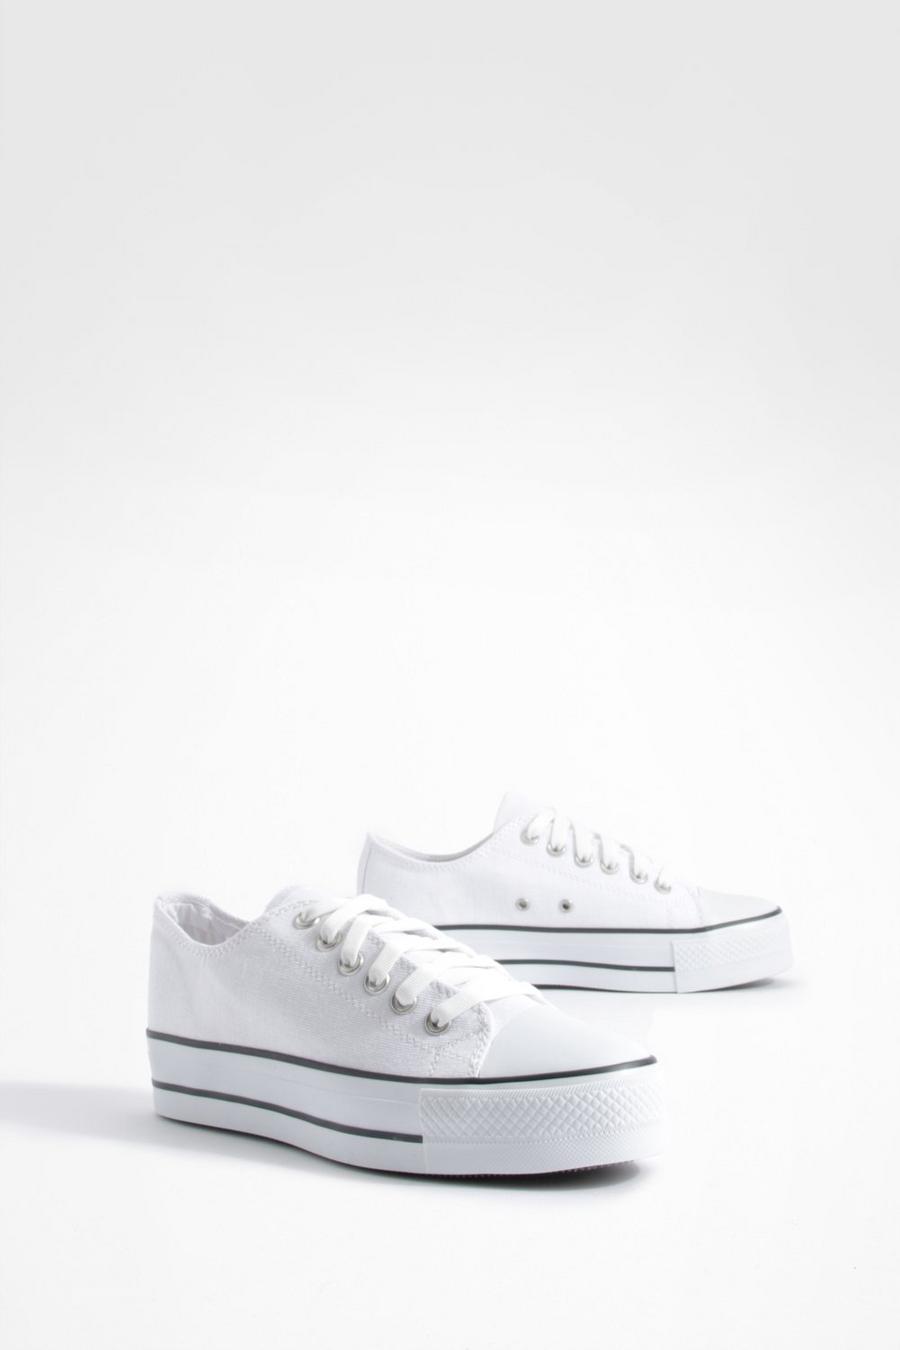 Klobige Low-Top Canvas Sneaker, White weiß